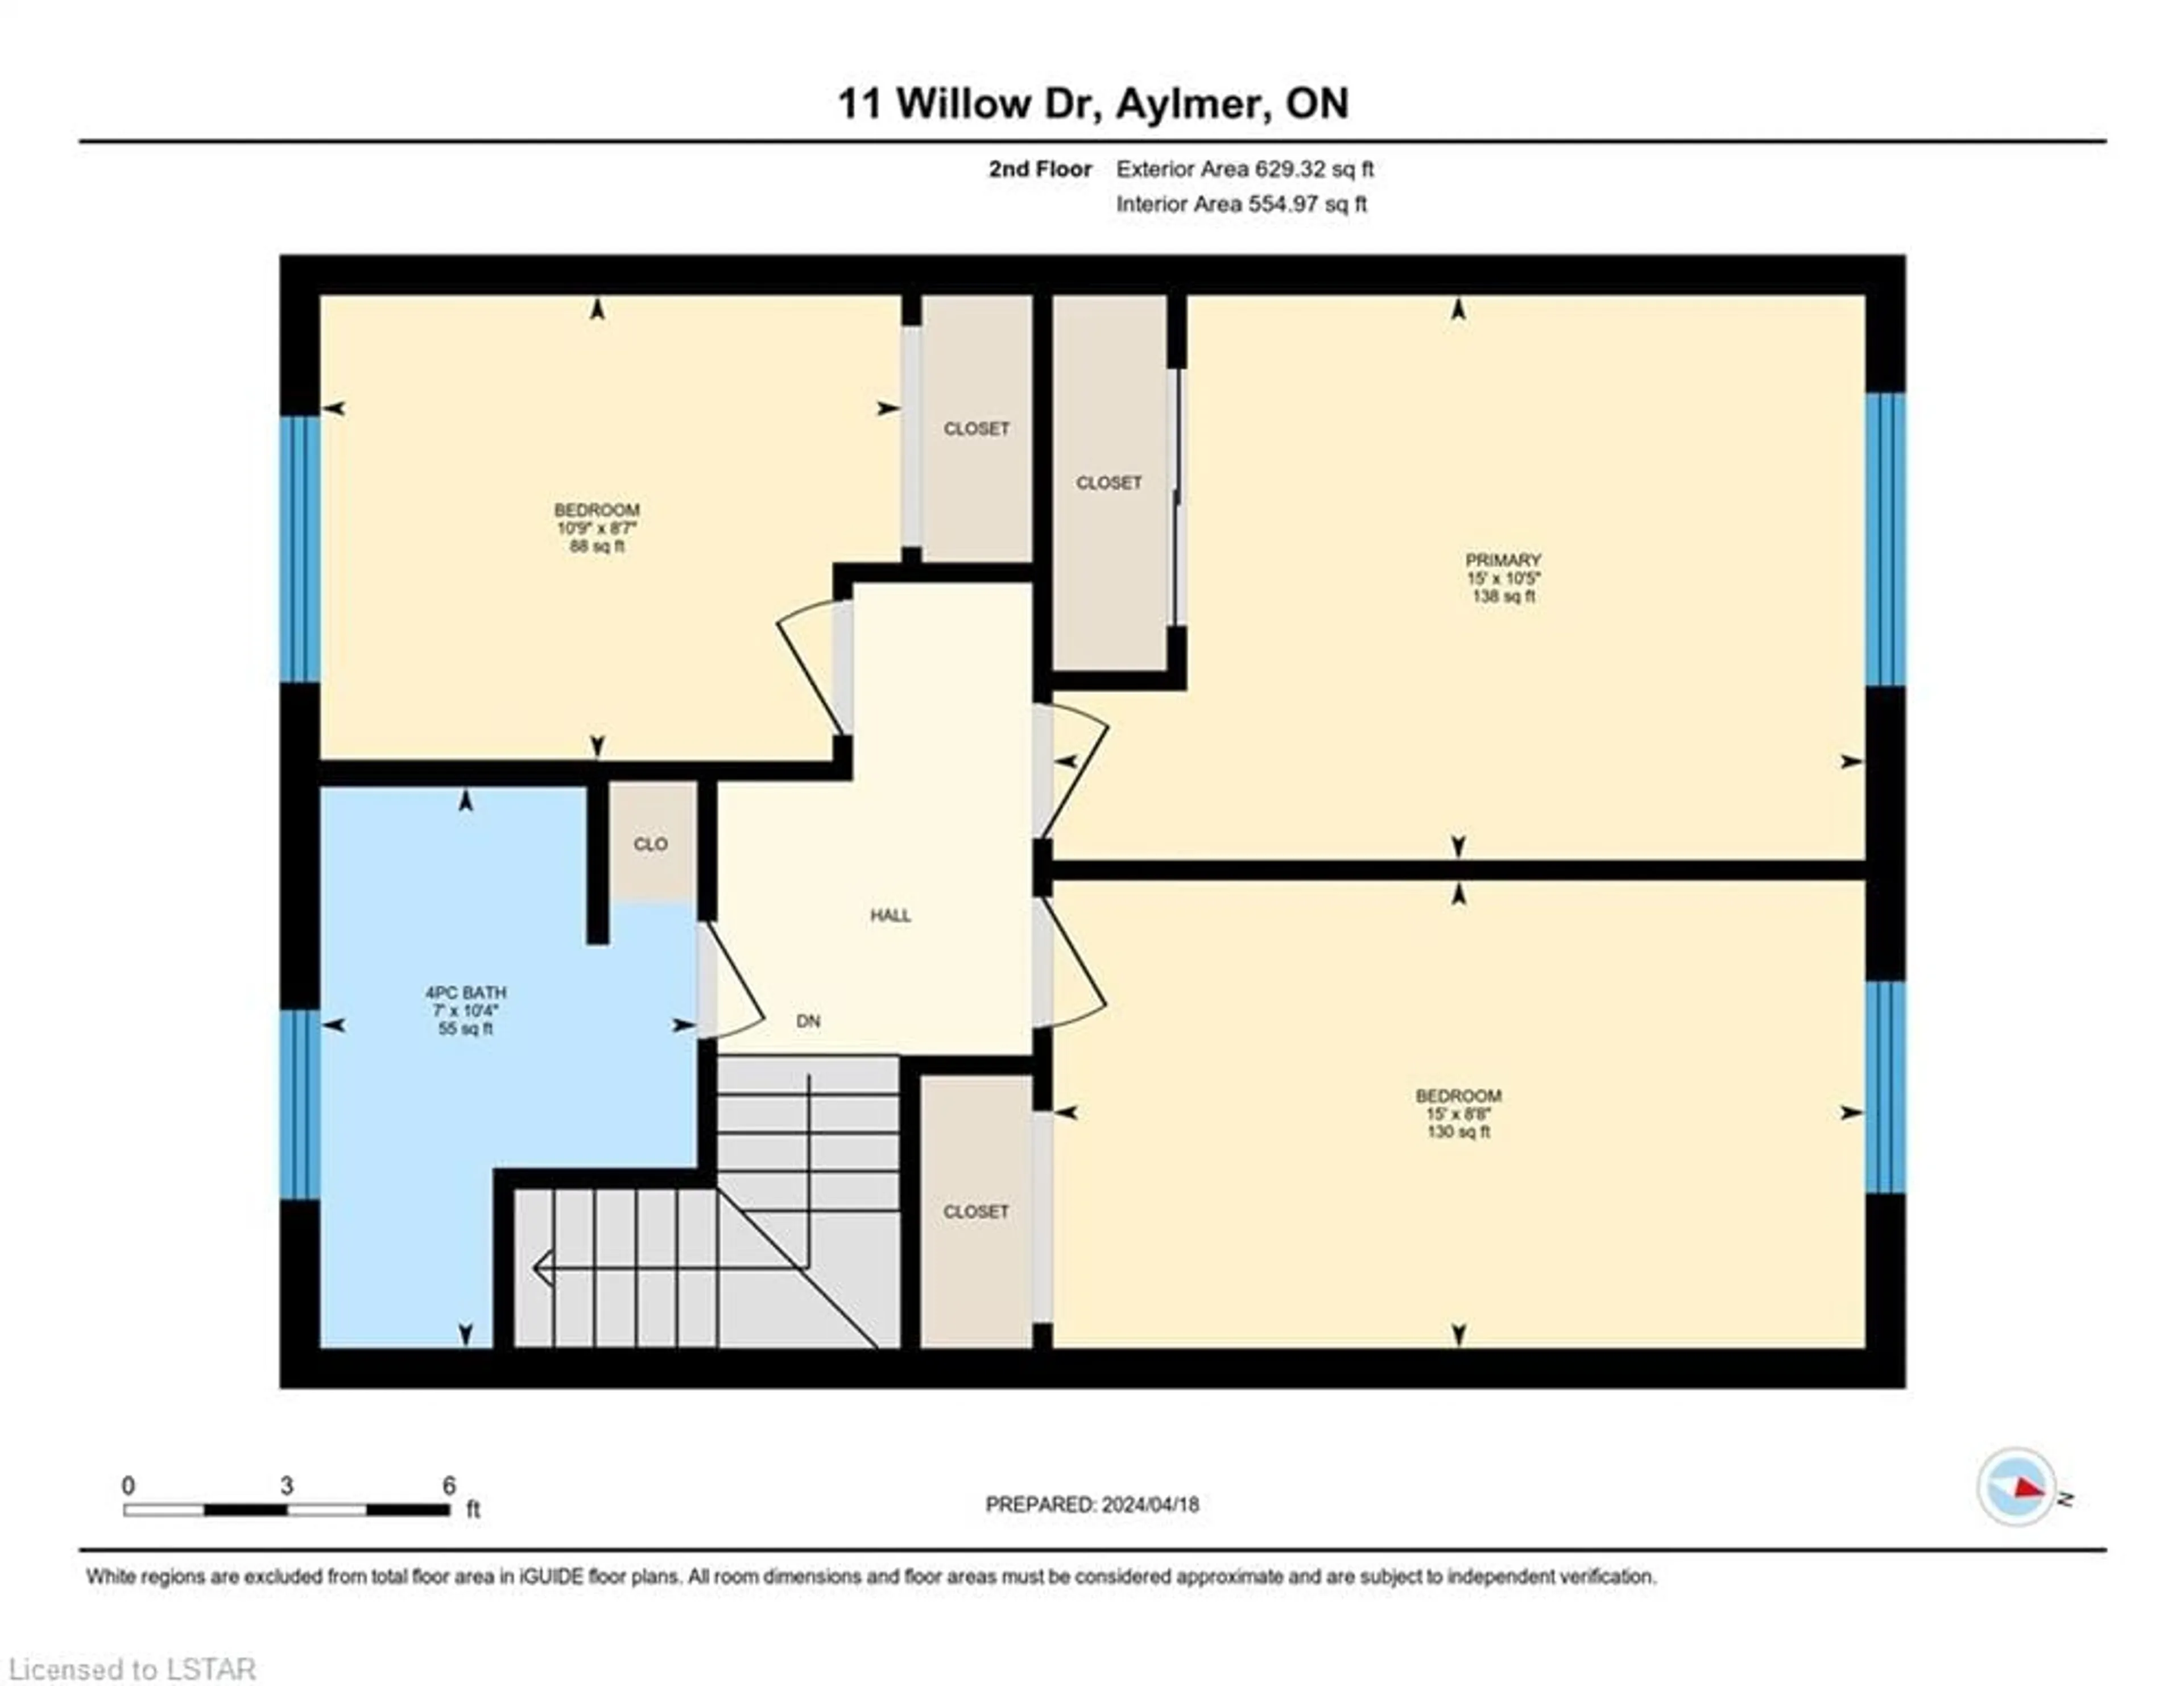 Floor plan for 11 Willow Dr, Aylmer Ontario N5H 3B4